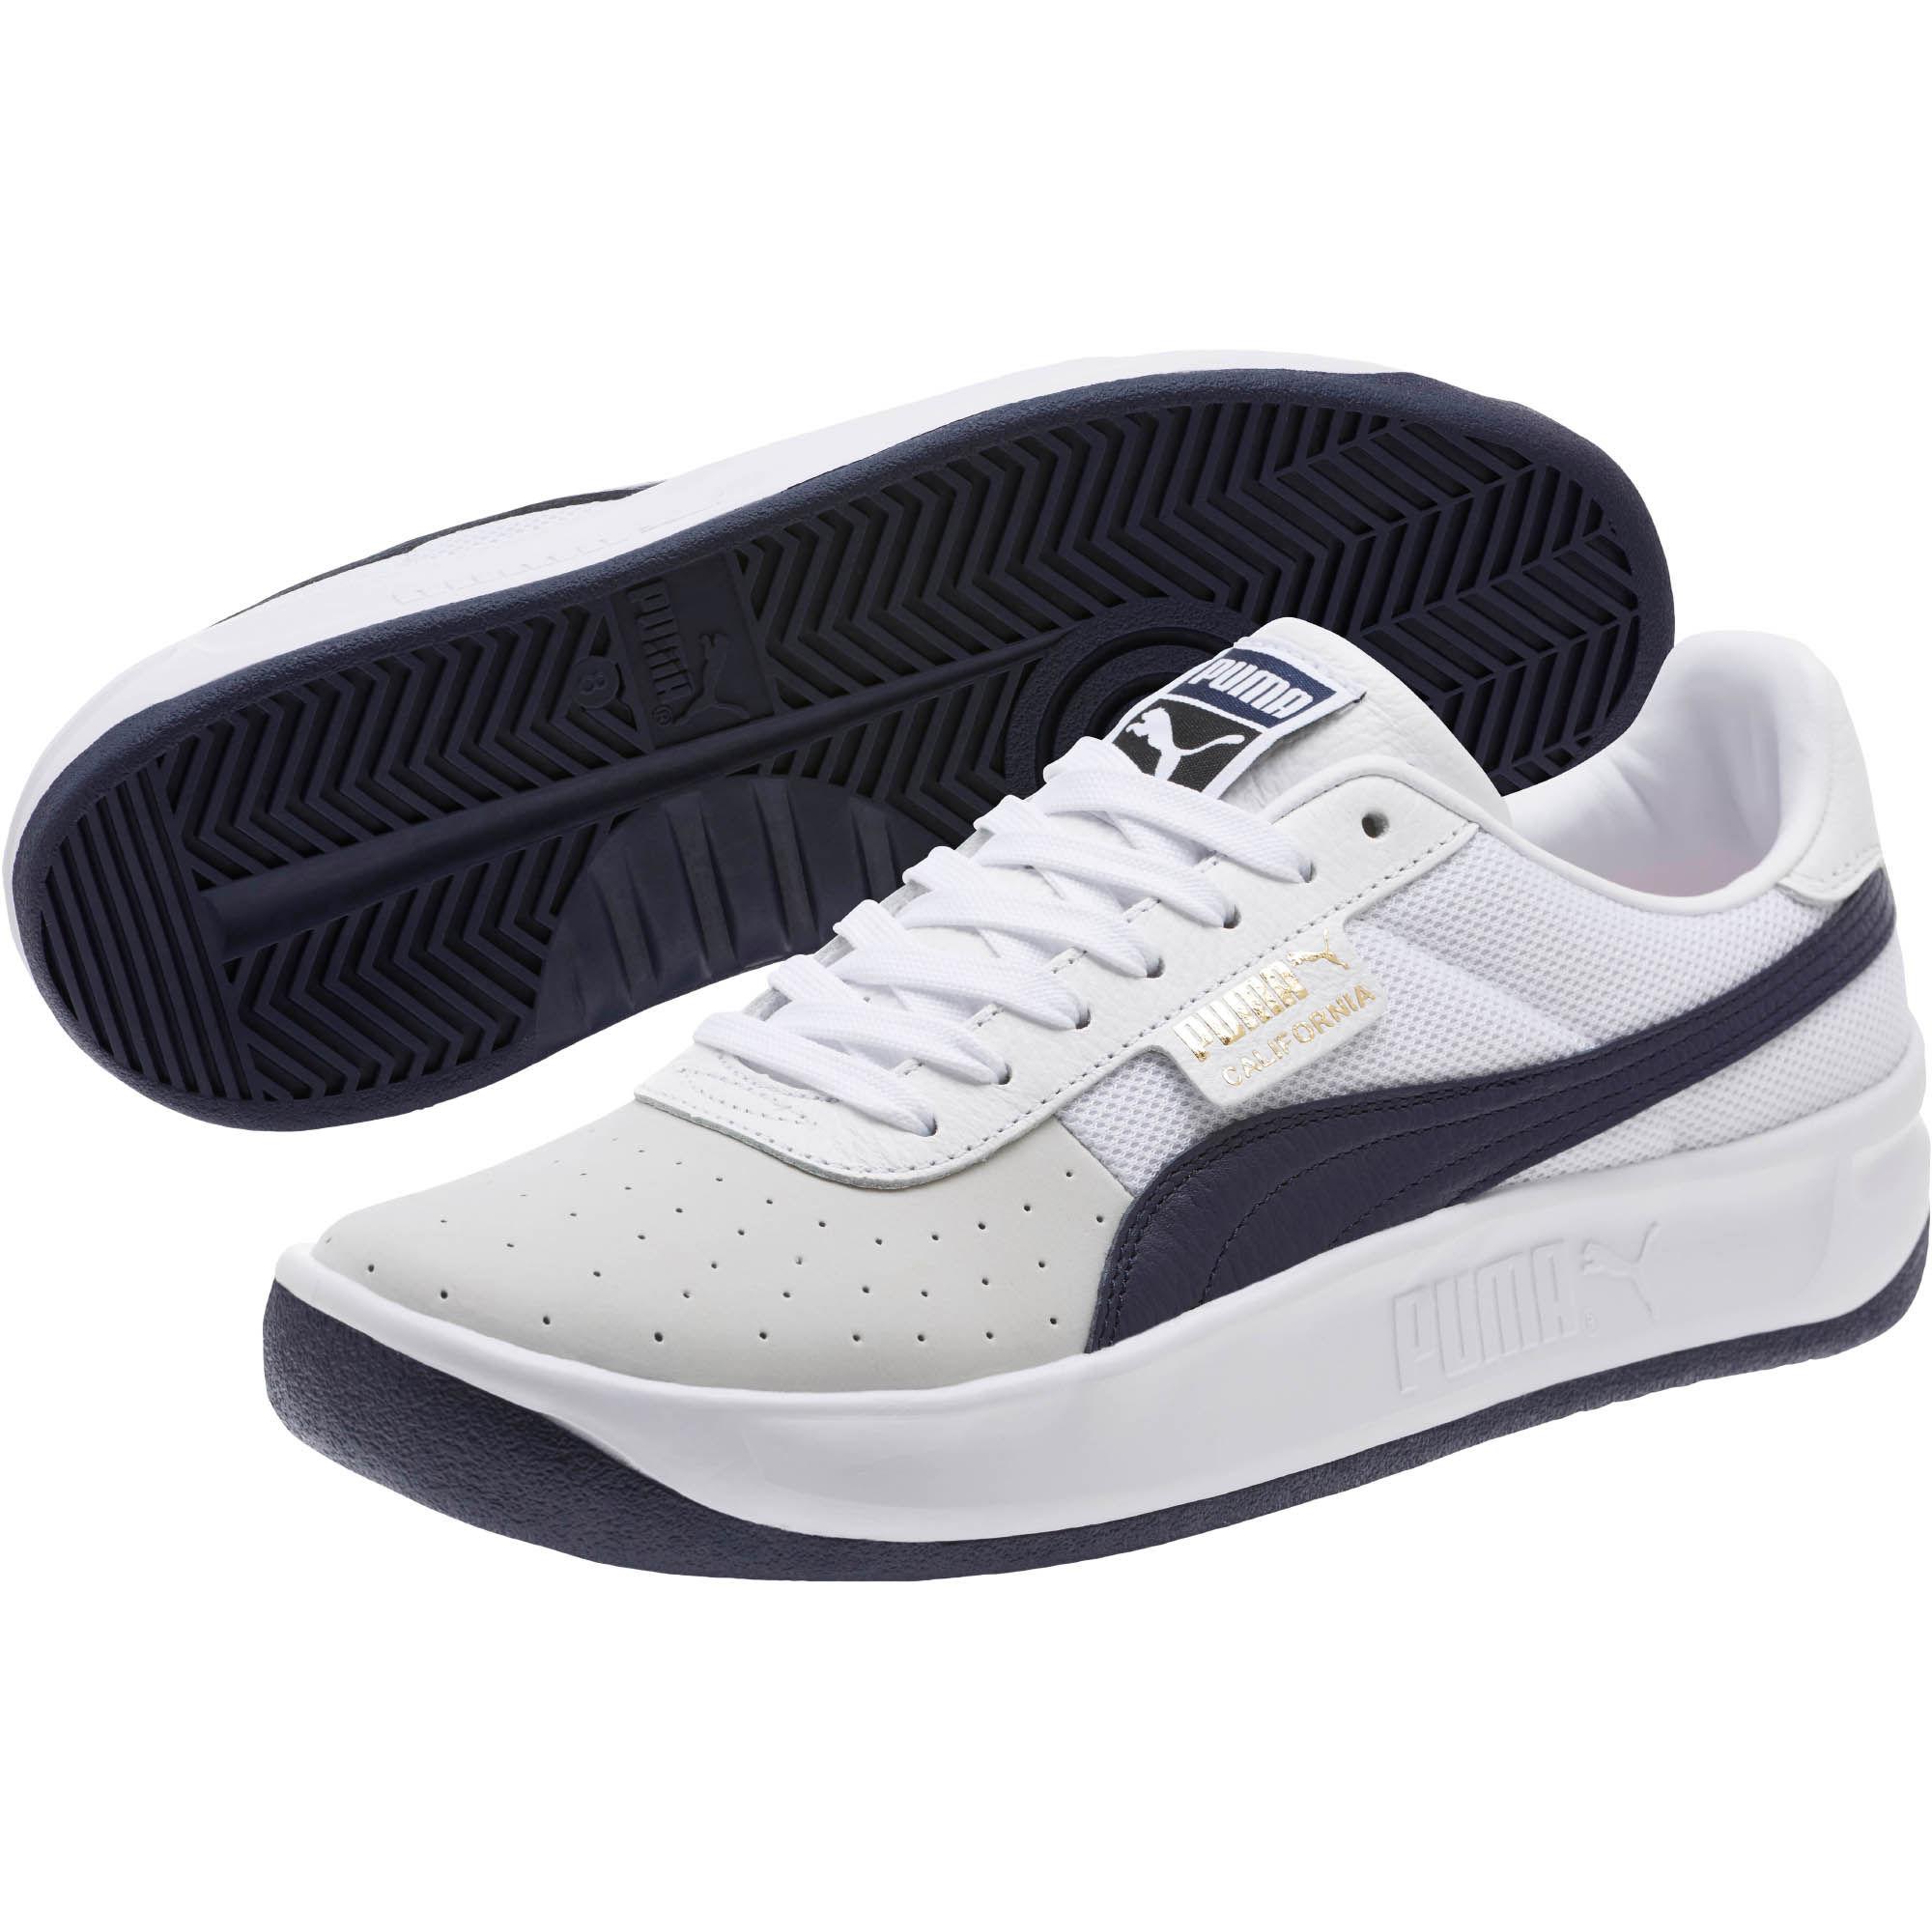 Lyst - Puma California Casual Unisex Sneakers in White for Men